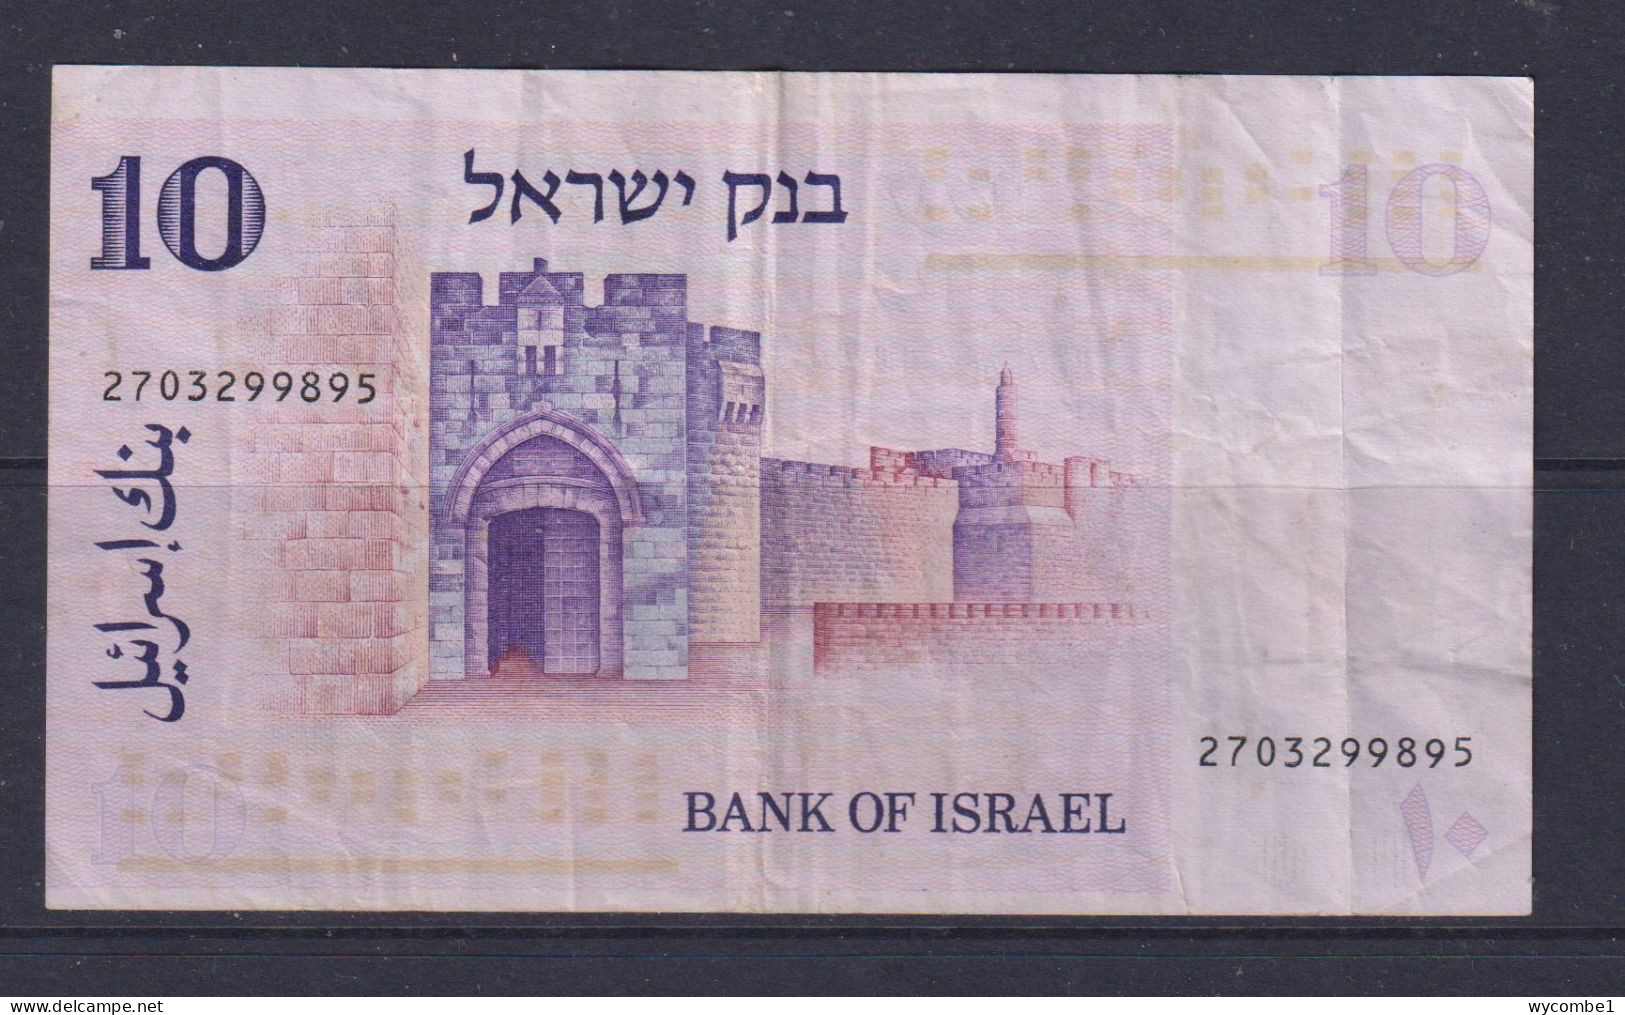 ISRAEL - 1973 10 Lirot Circulated Banknote - Israel